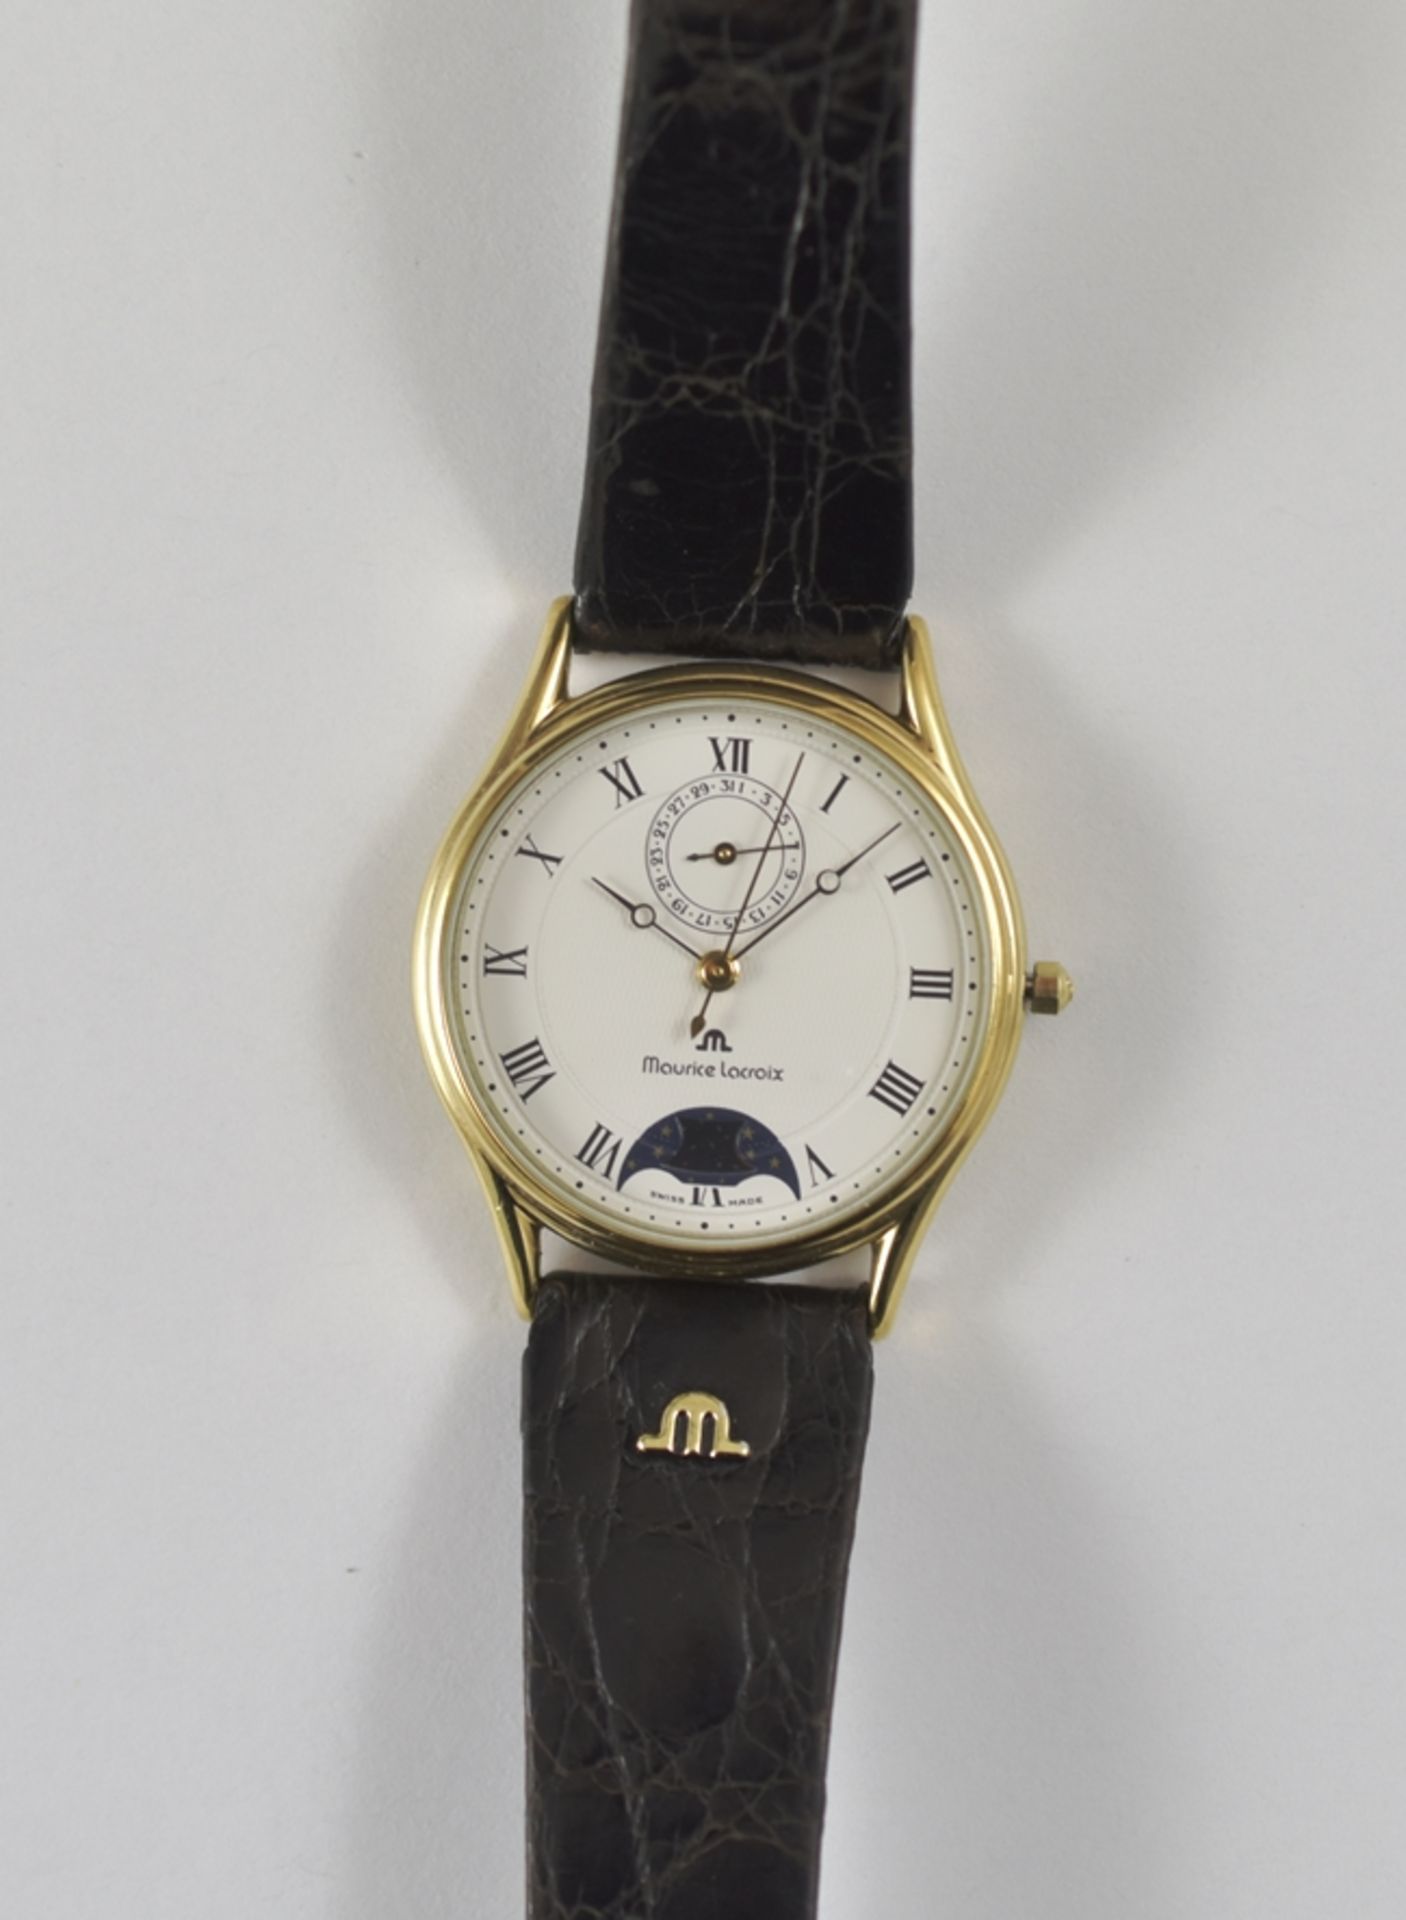 Feine Maurice Lacroix Unisex-Armbanduhr. Stahl/Goldgehäuse. Weißes Zifferblatt, Tagesdatum, Mondal